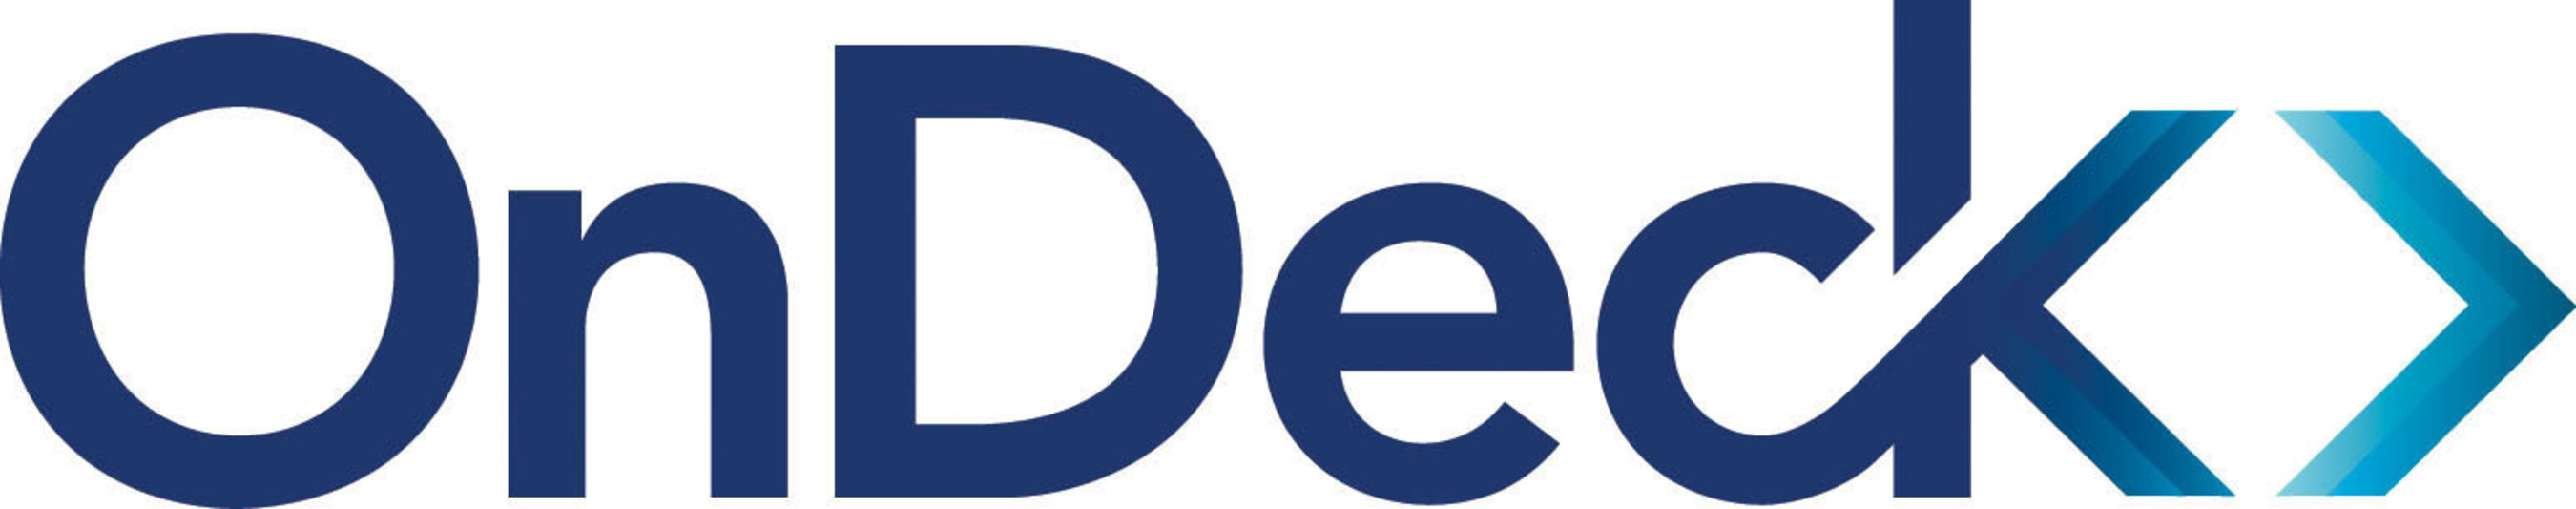 OnDeck Logo. (PRNewsFoto/OnDeck) (PRNewsFoto/)